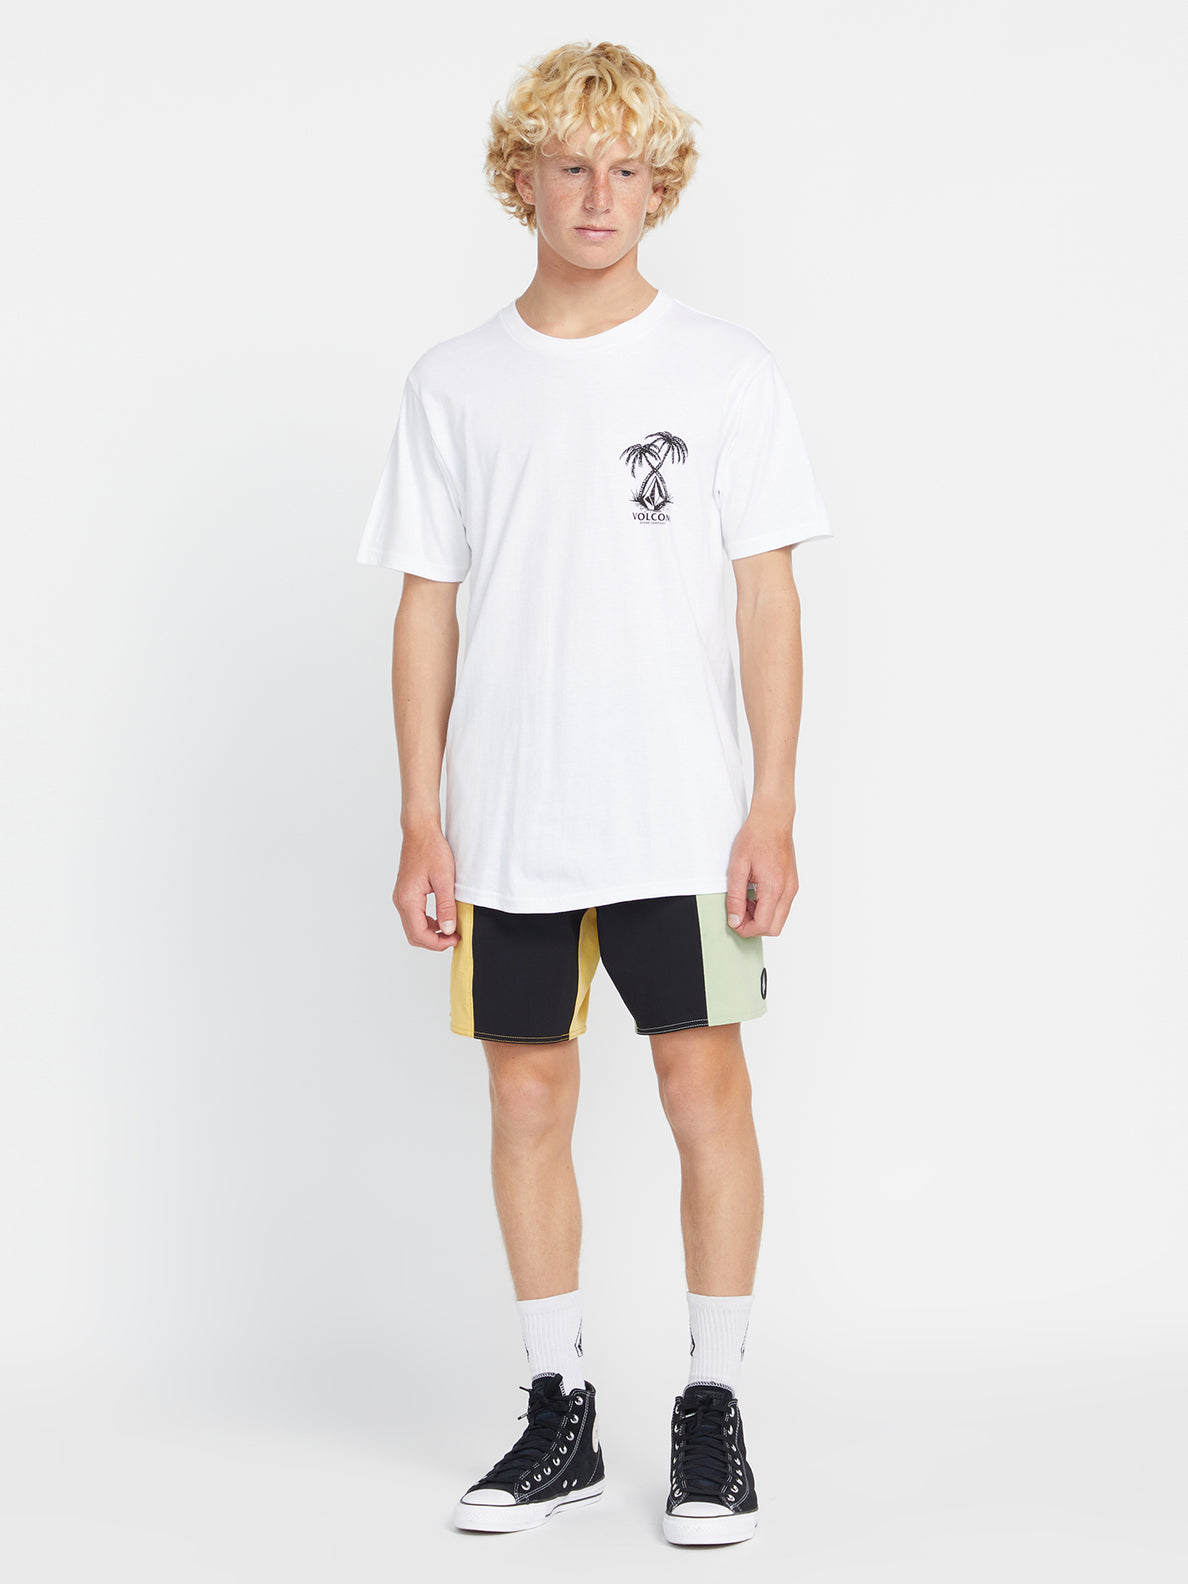 Levi's Men's Premium Cotton 4 White Crew Neck T-Shirt Underwear Small 34-36